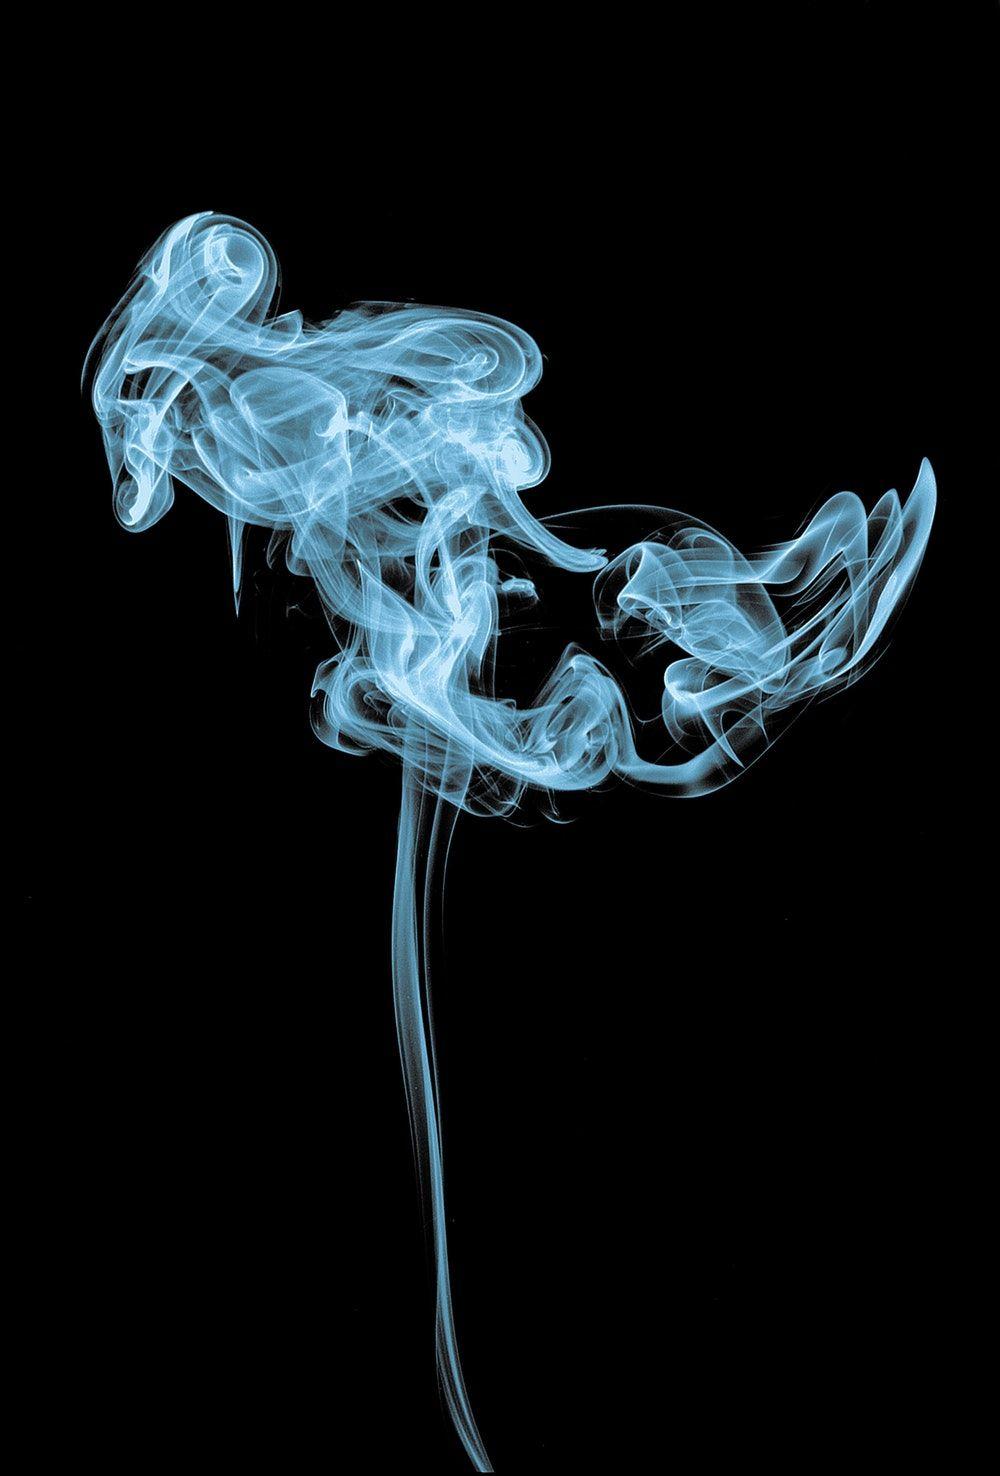 Weed Smoke Wallpapers - Top Free Weed Smoke Backgrounds - WallpaperAccess